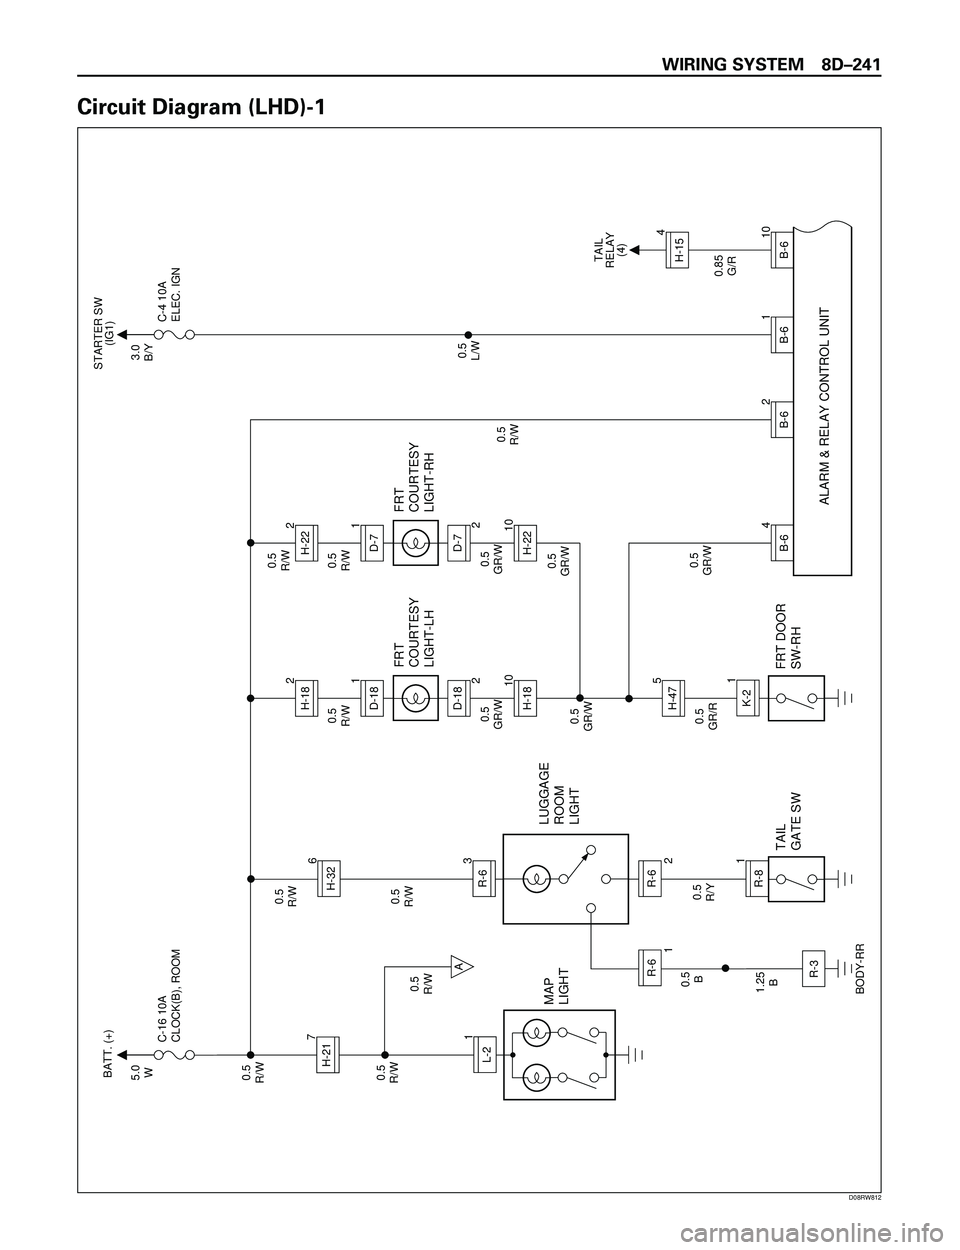 ISUZU TROOPER 1998  Service Repair Manual WIRING SYSTEM 8DÐ241
Circuit Diagram (LHD)-1
TAIL
RELAY
(4)
MAP
LIGHT
5.0
W
0.5
R/W
0.5
R/W
0.5
R/W
0.5
R/W C-16 10A
CLOCK(B), ROOMBATT. (+)
STARTER SW
(IG1)
3.0
B/Y
C-4 10A
ELEC. IGN
0.5
R/Y
LUGGAGE